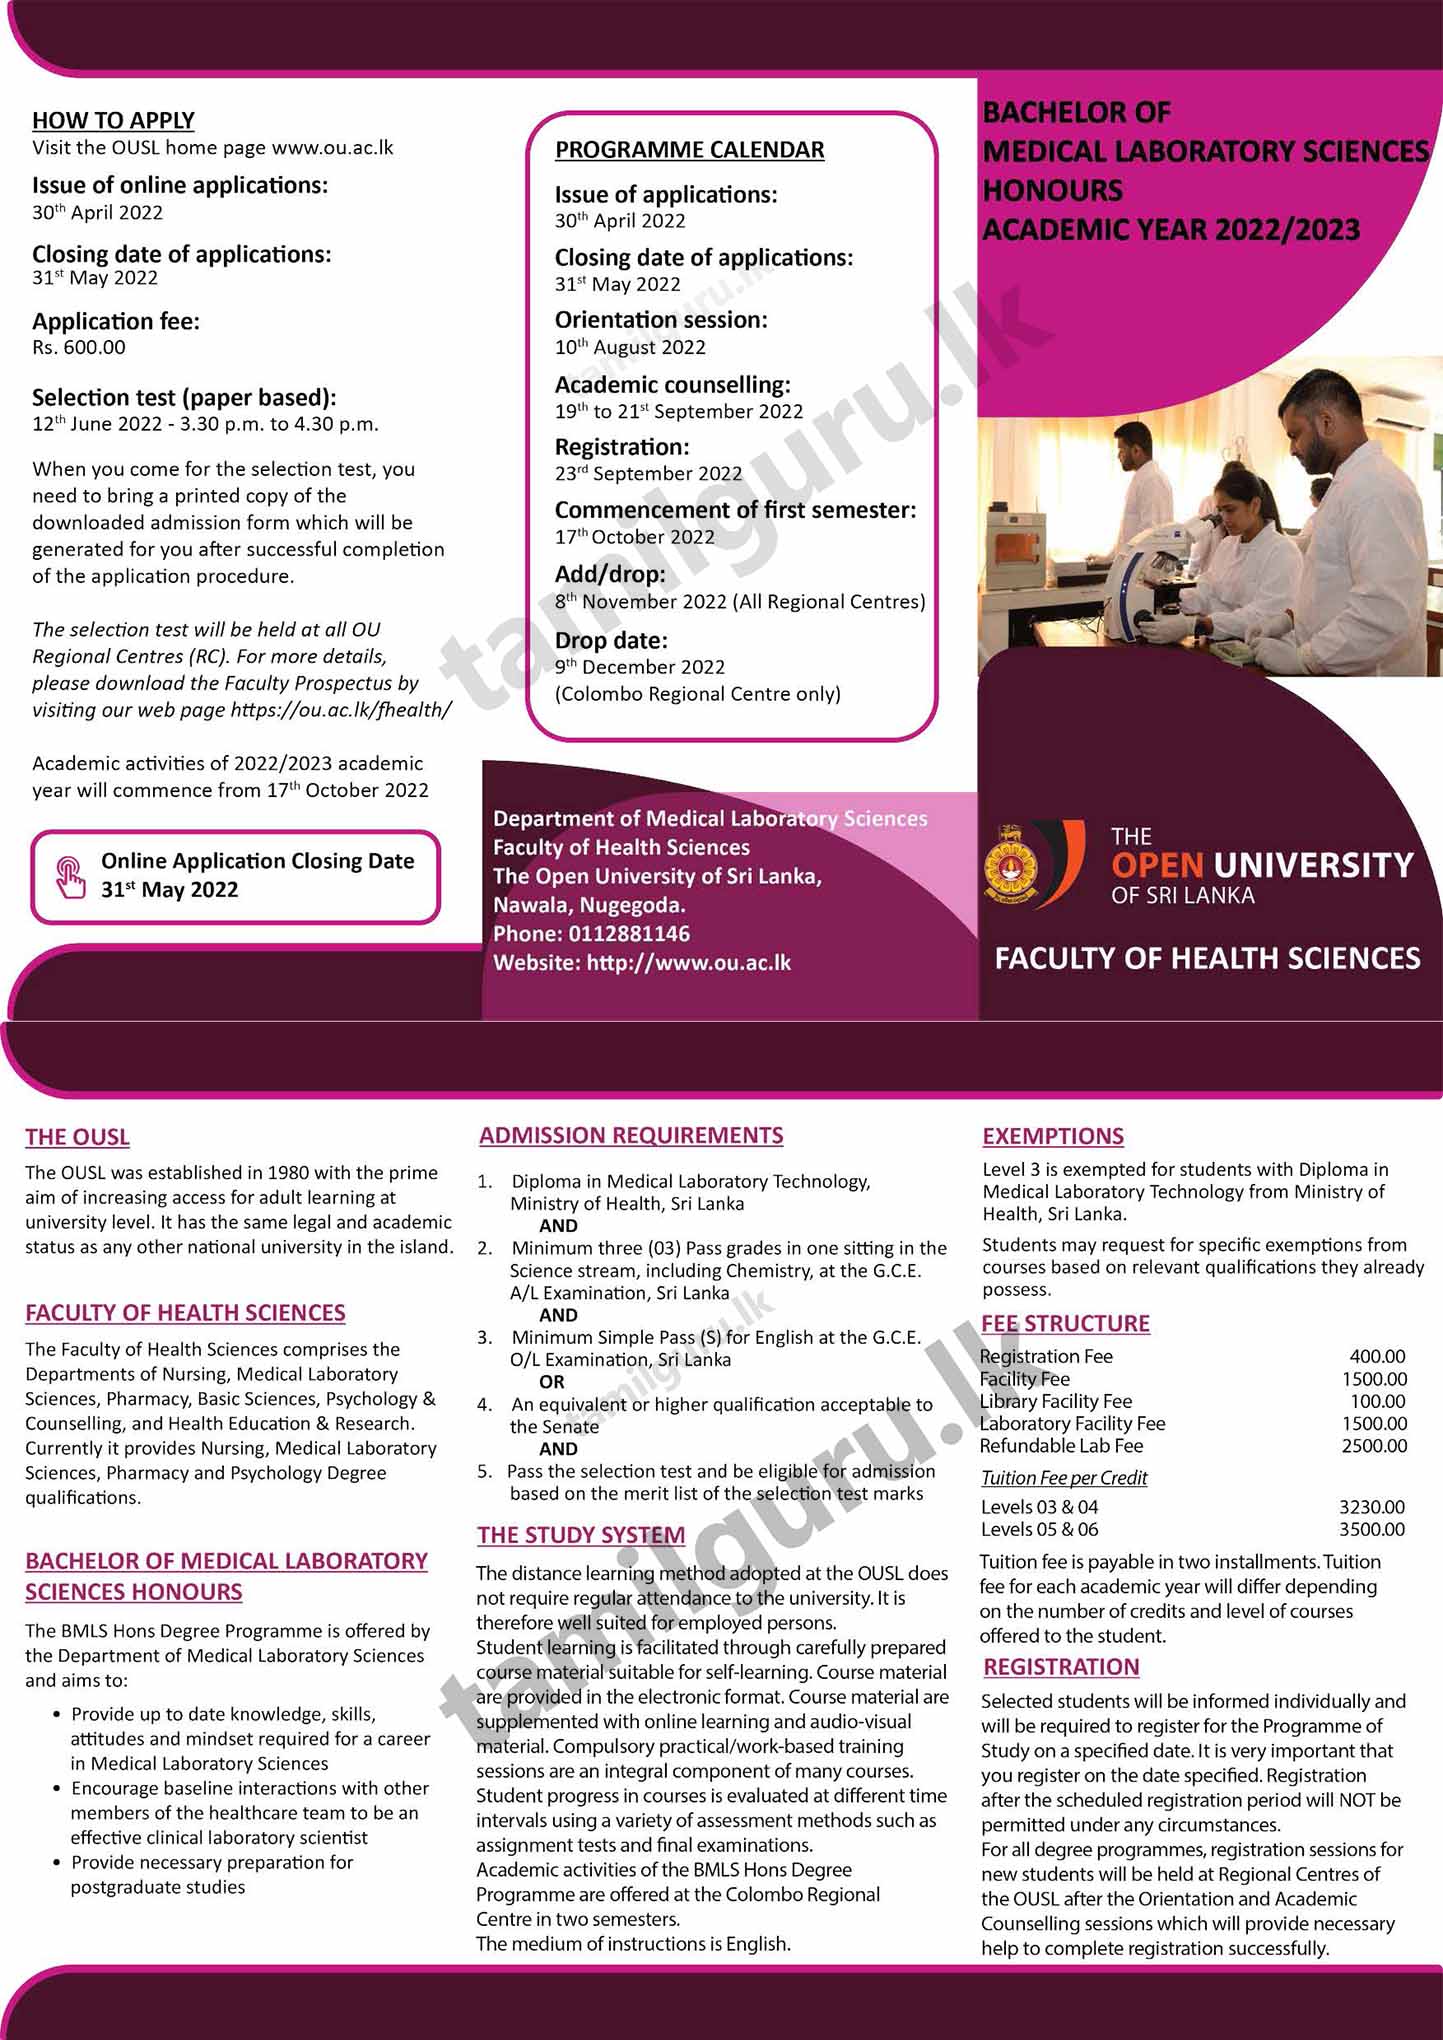 Bachelor of Medical Laboratory Sciences (BMLS) Degree Programme 2022/2023 - The Open University of Sri Lanka